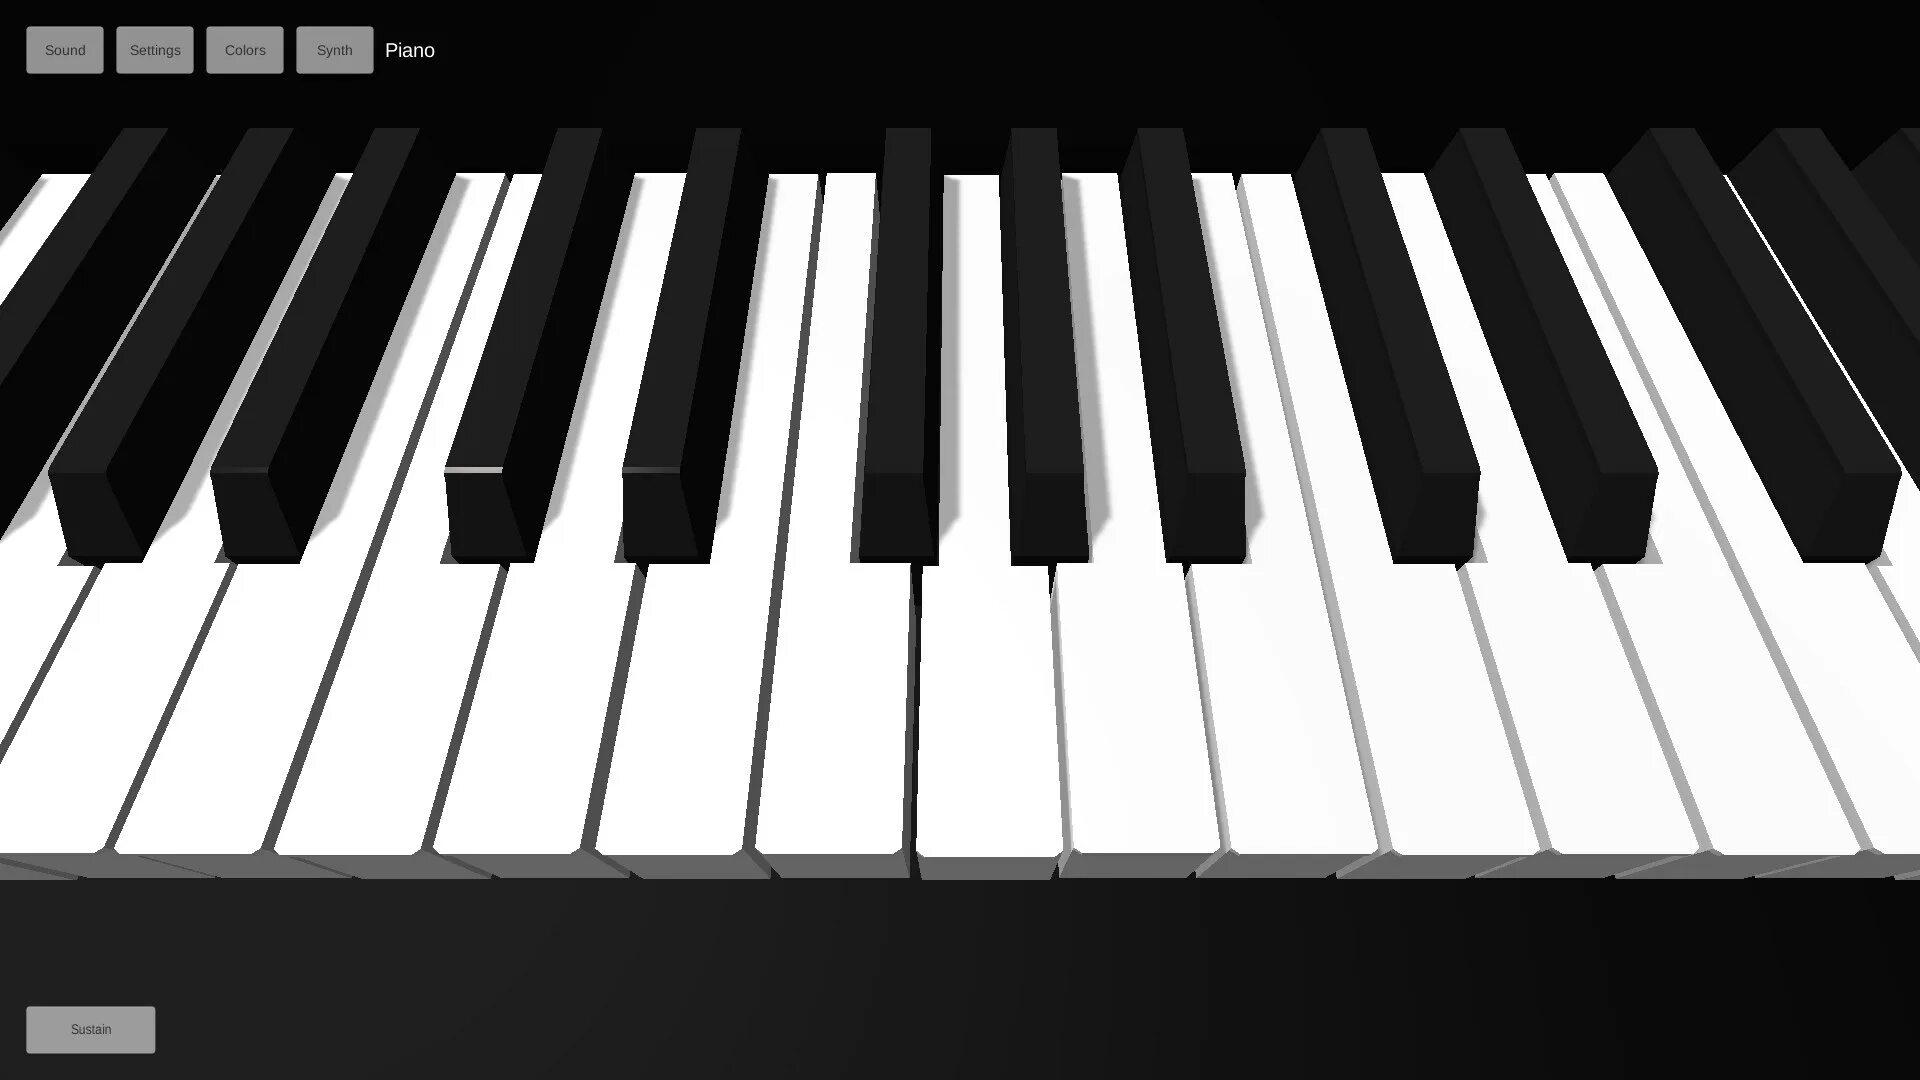 Fortepiano Keyboard 3d model. Фортепианная клавиатура. Клавиши фортепиано. Клавиши пианино. Piano sounds